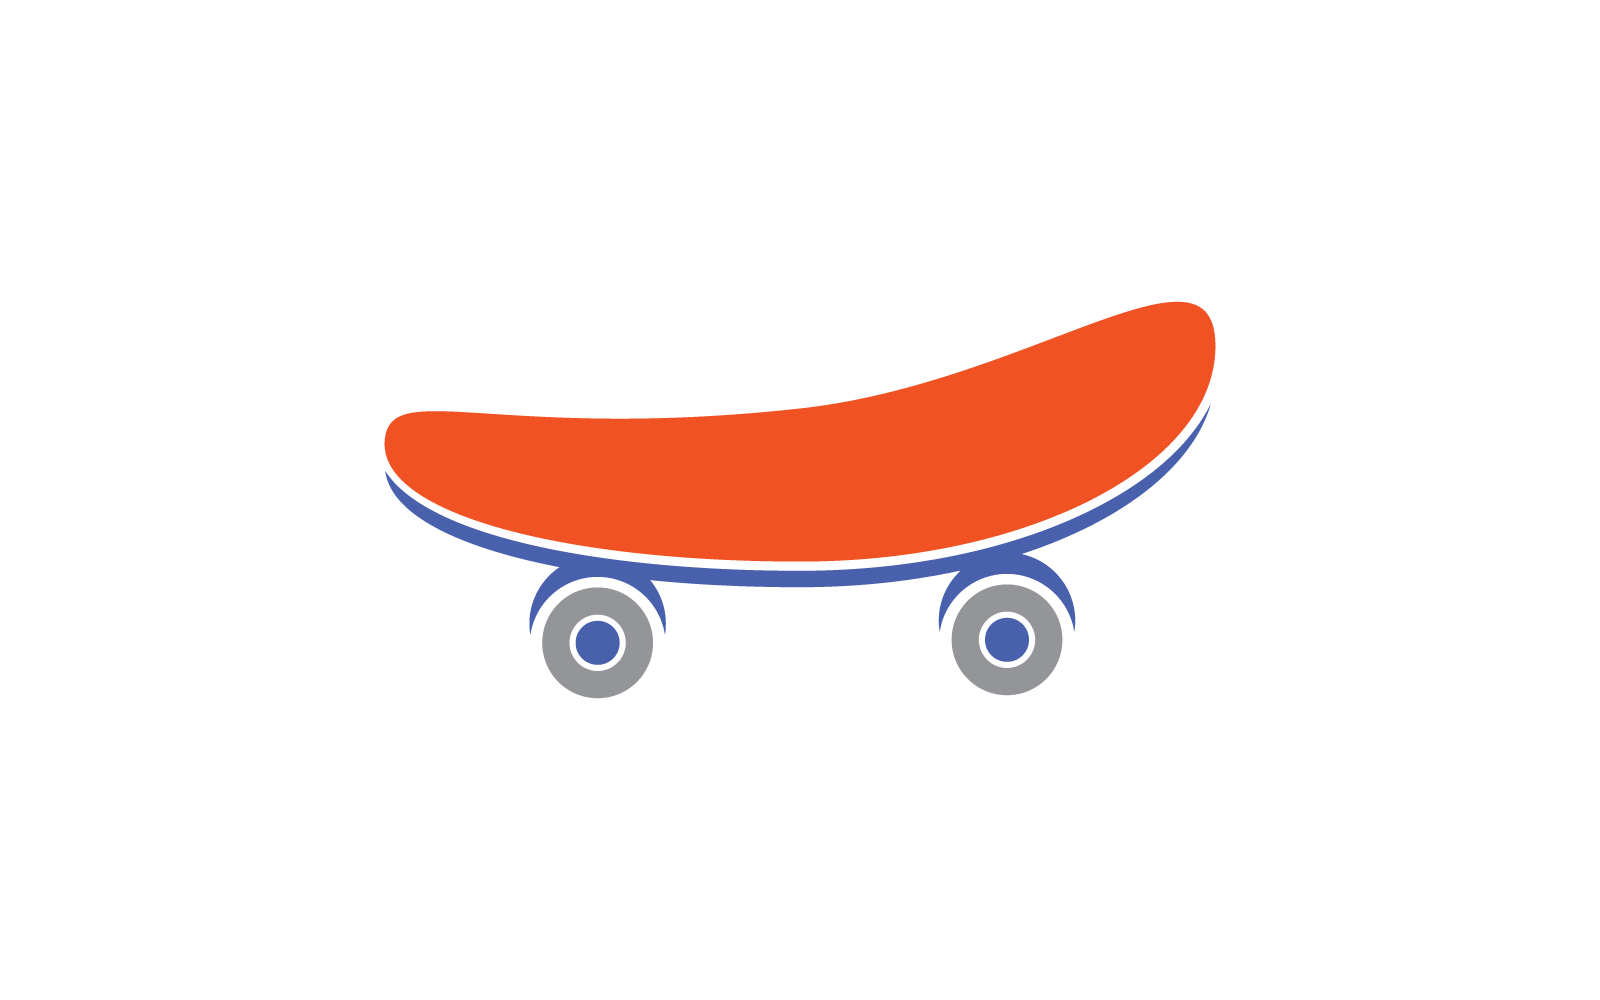 Skateboard icon illustration vector isolated on white background